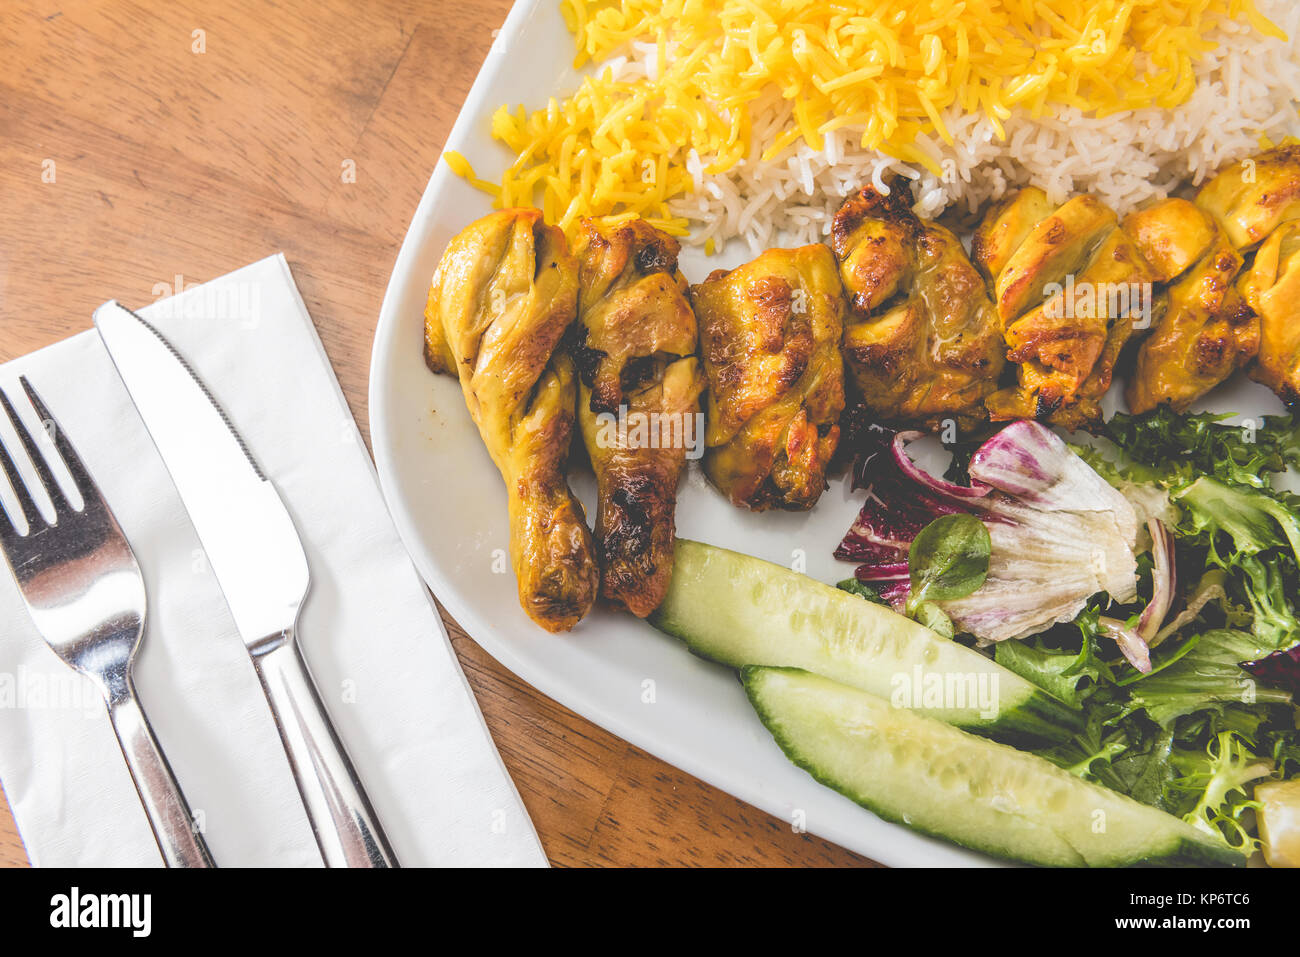 persian-cuisine-chicken-wings-KP6TC6.jpg